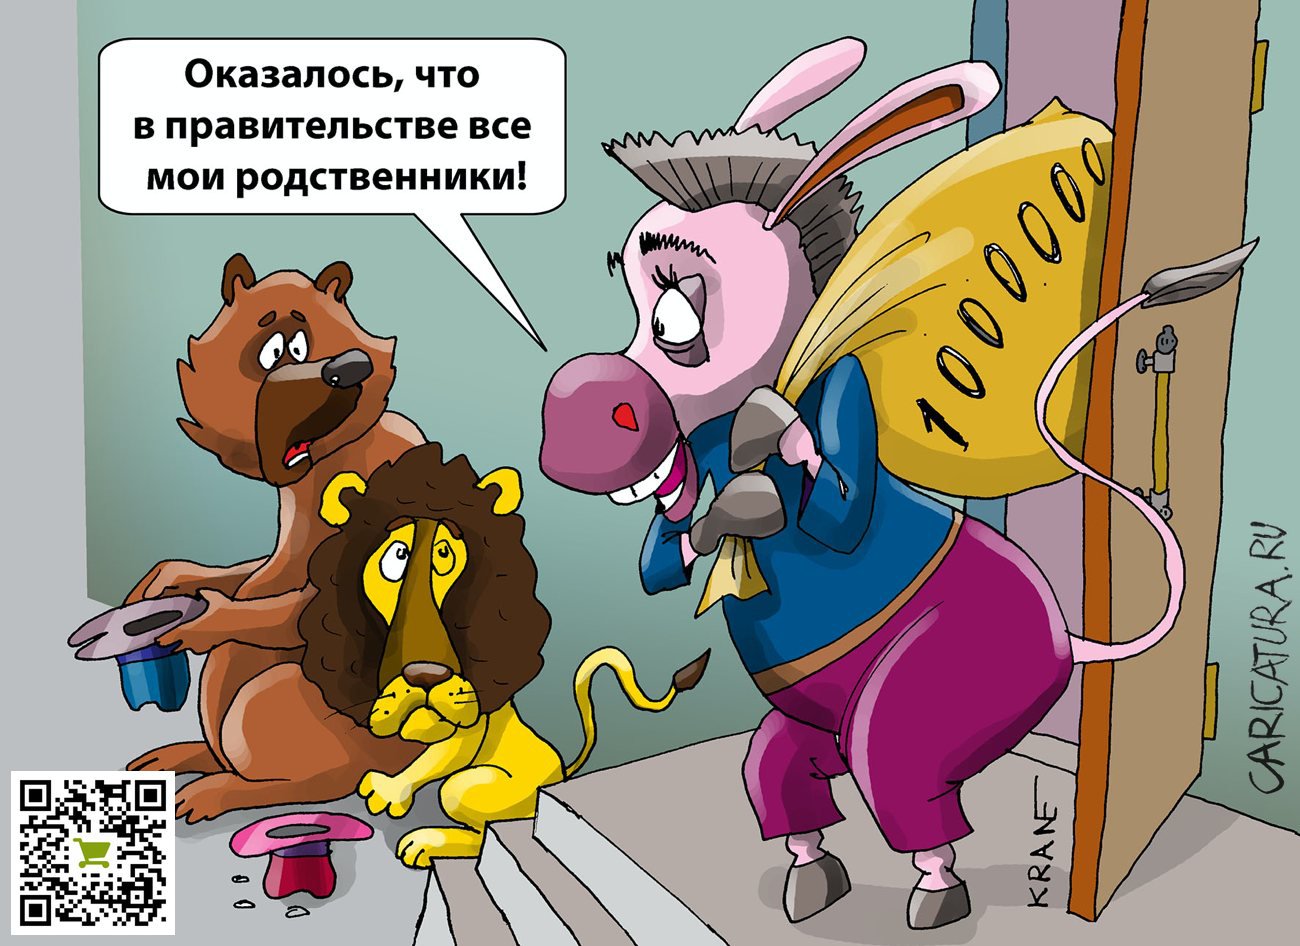 Карикатура "Сквозь призму чуда", Евгений Кран